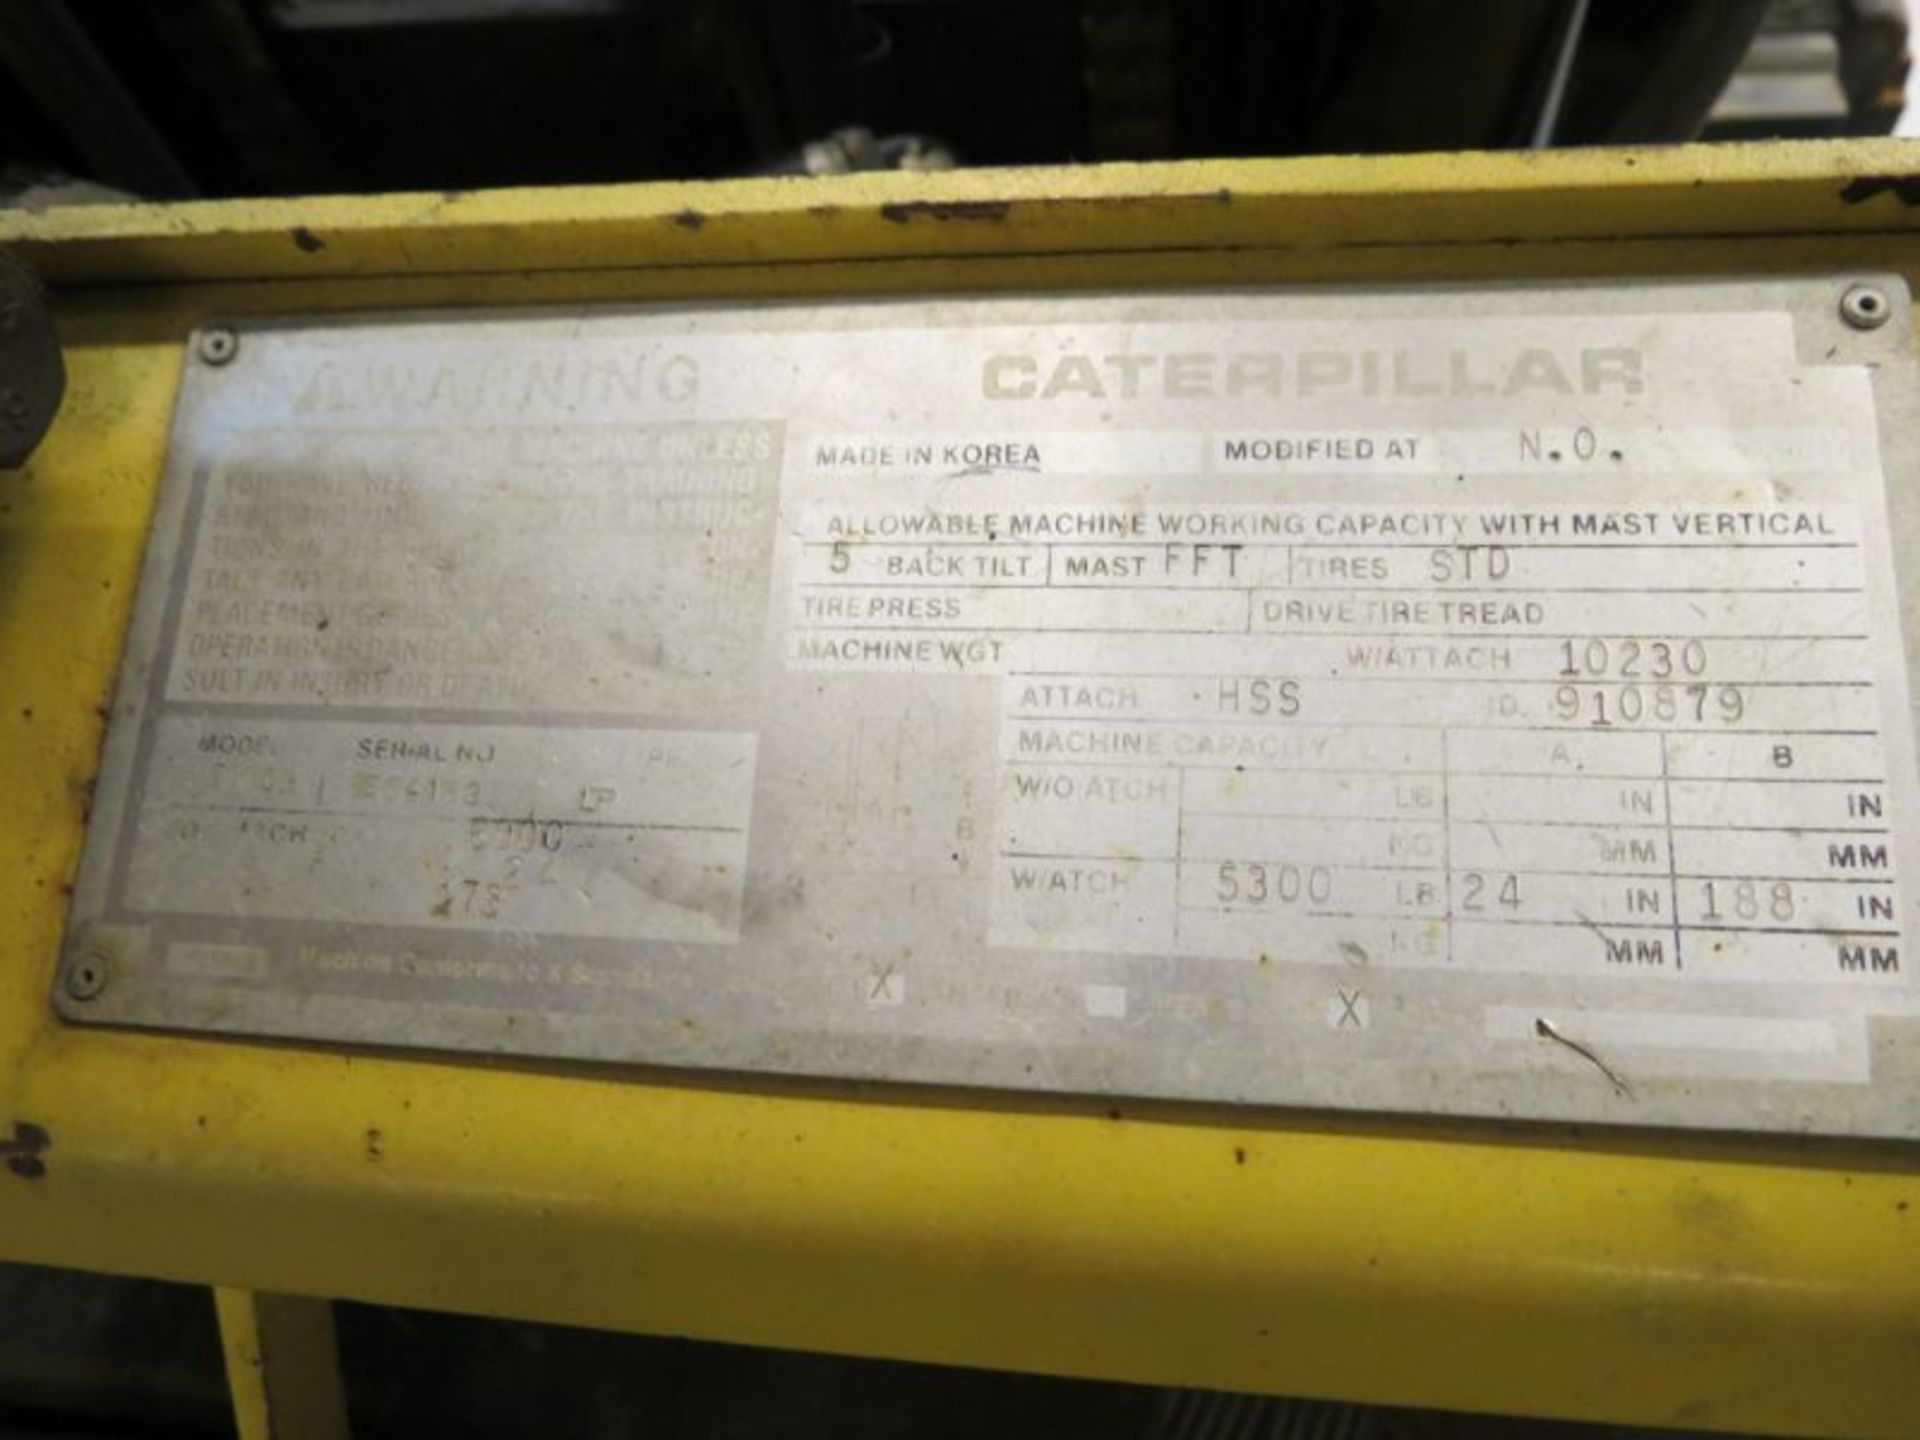 Caterpillar TC60D Forklift, capacity 5300lbs, Ne battery, Hydaulic hose leak s/n 910879, hours : - Image 6 of 6